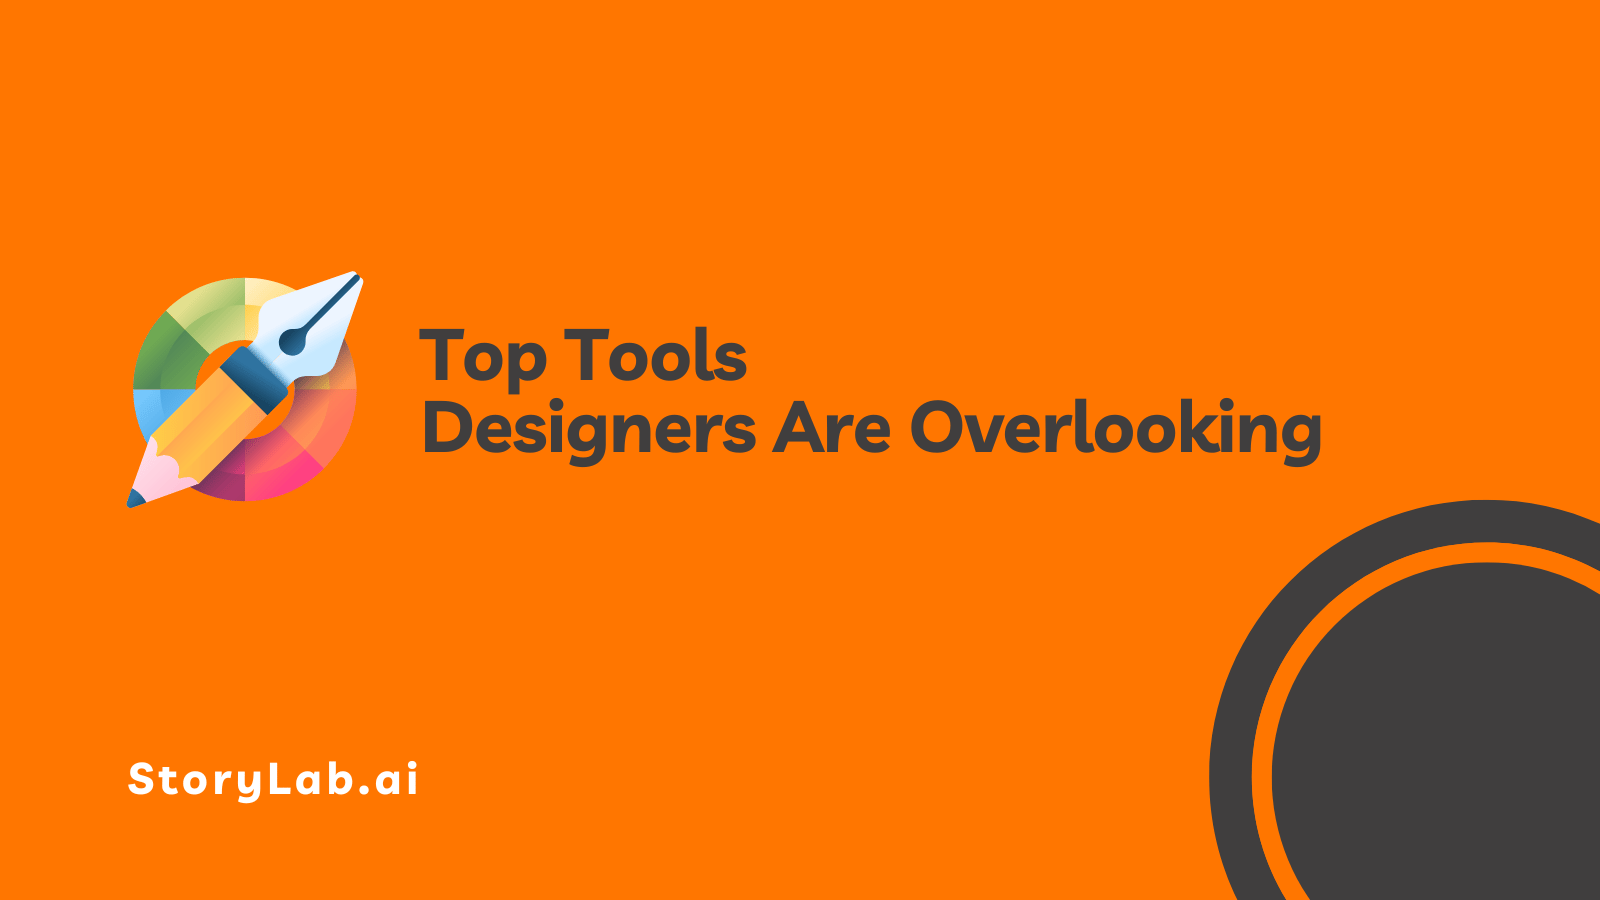 Top Tools Designers Are Overlooking